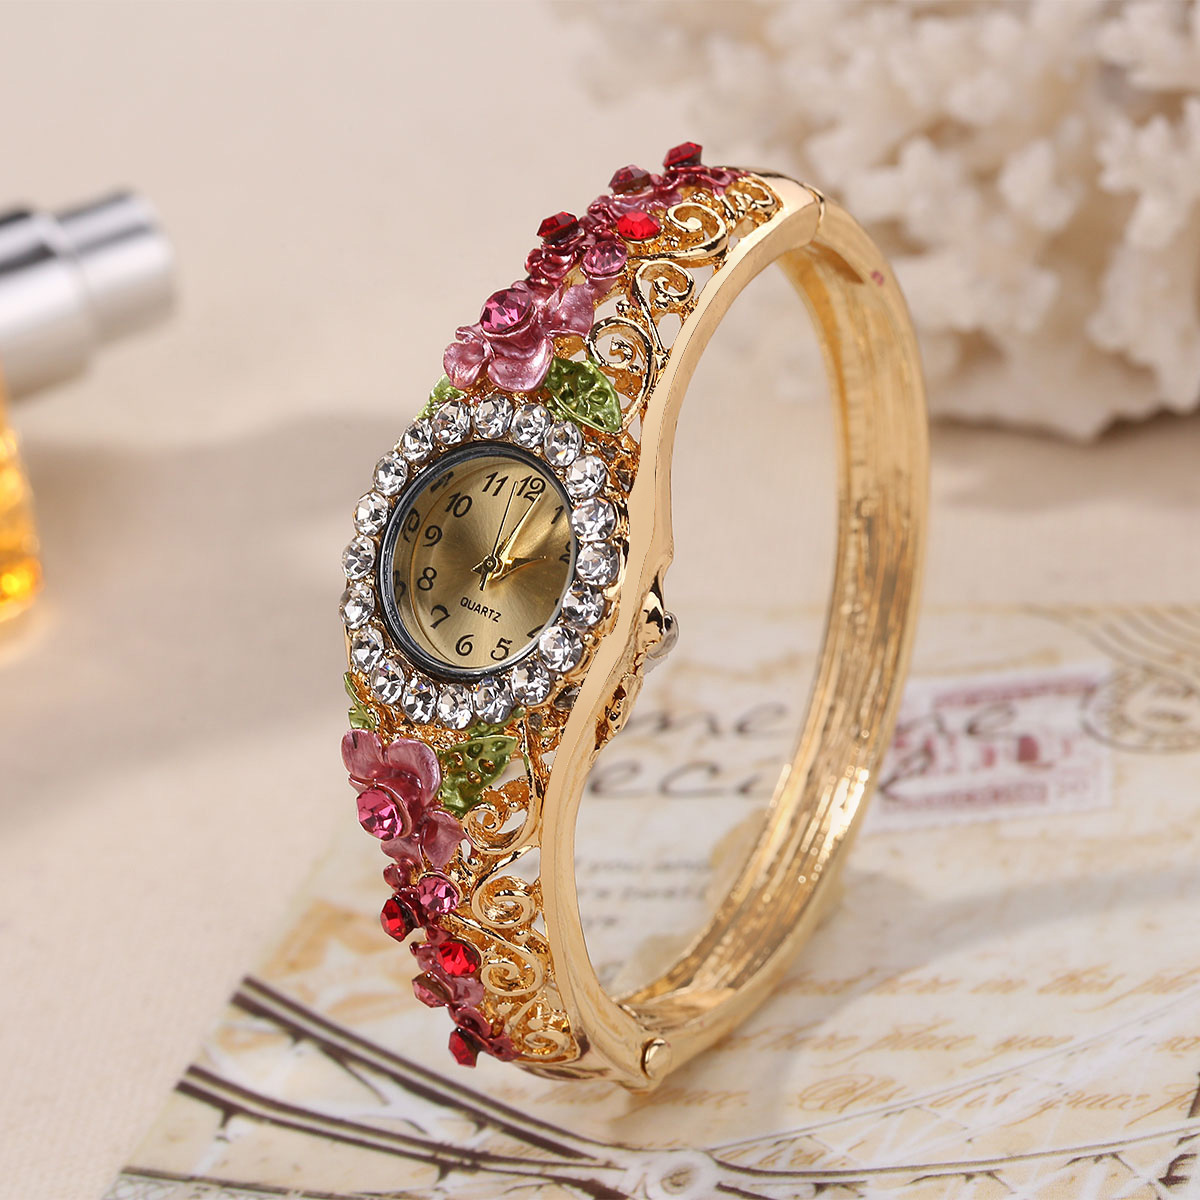 Wish Popular Products Vintage Cloisonne 3D Flower Blooming Rich Women's Wrist Watch Women's Fashion Bracelet Quartz Watch